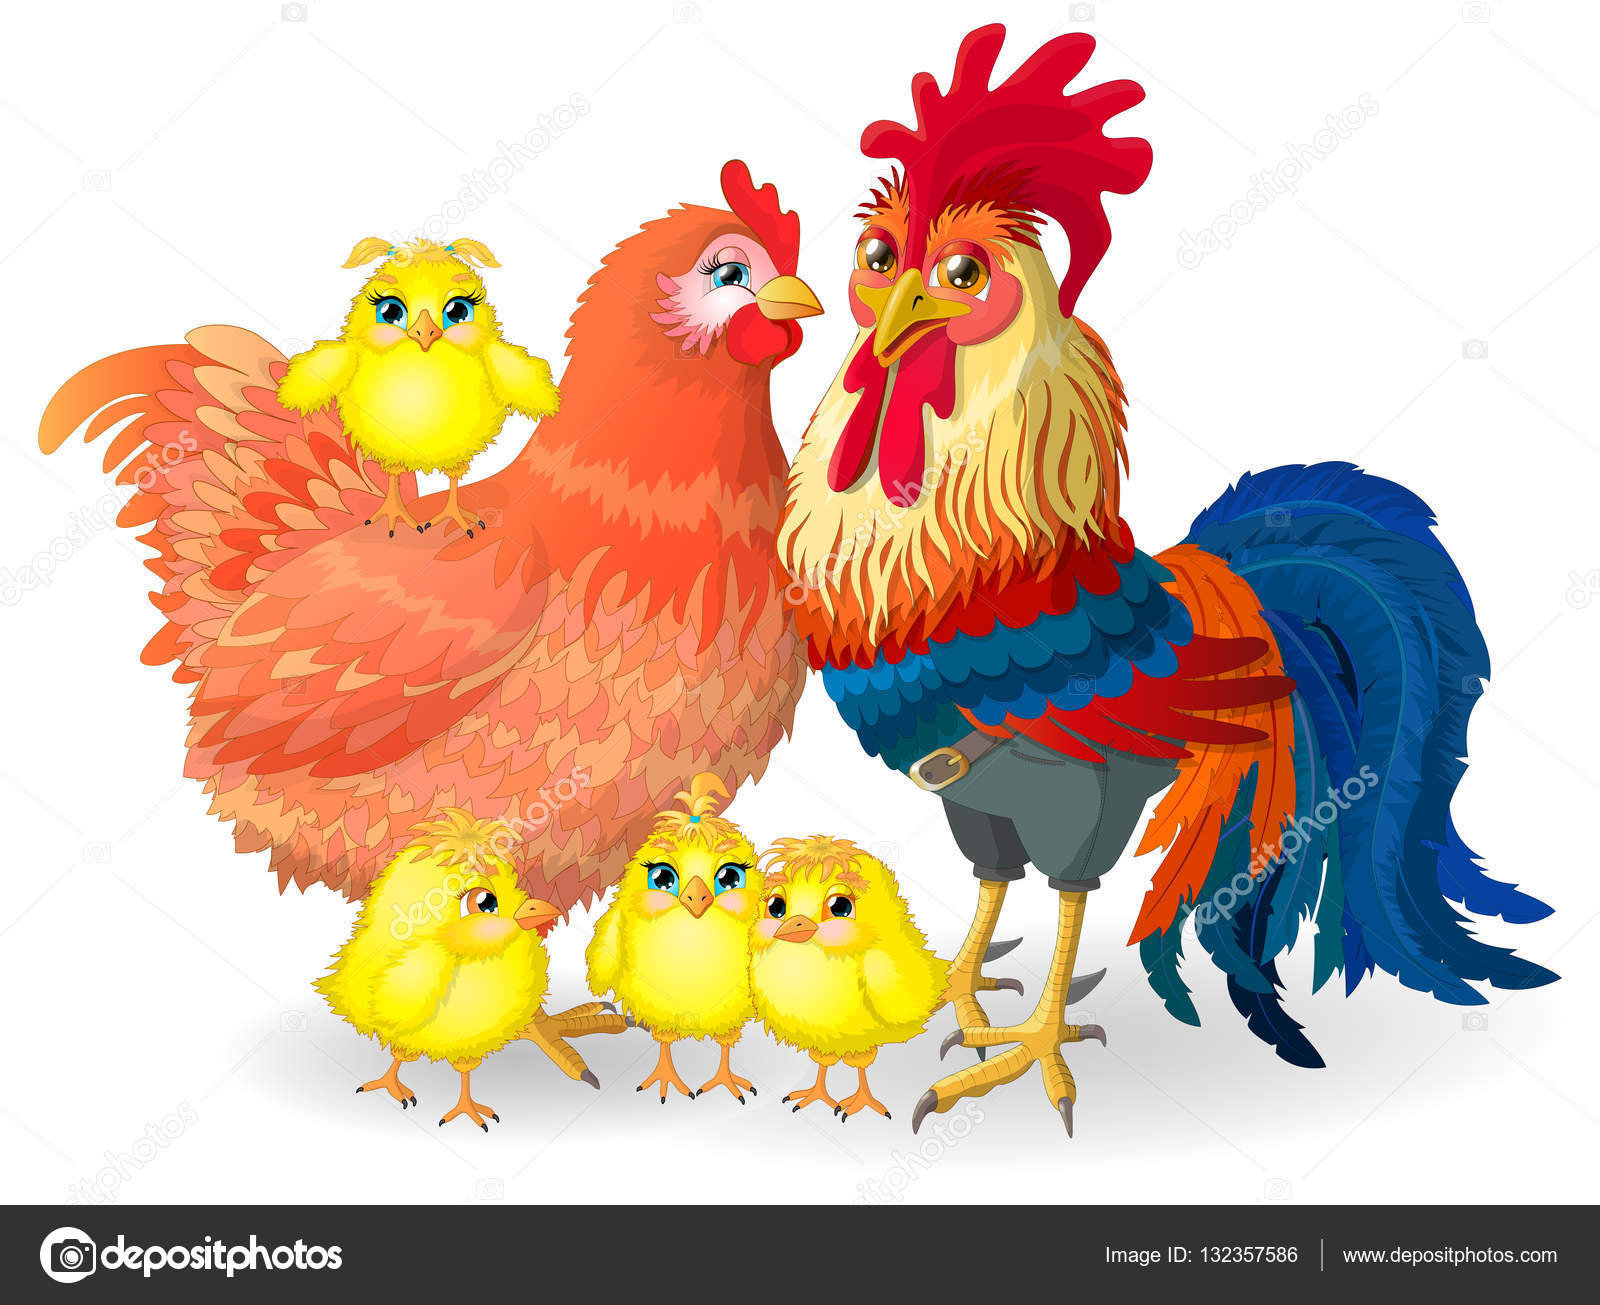 Family cock. Петушок с семьёй. Петух курица цыпленок. Семья петух курица цыпленок. Семья петух Курочка и цыплятам.